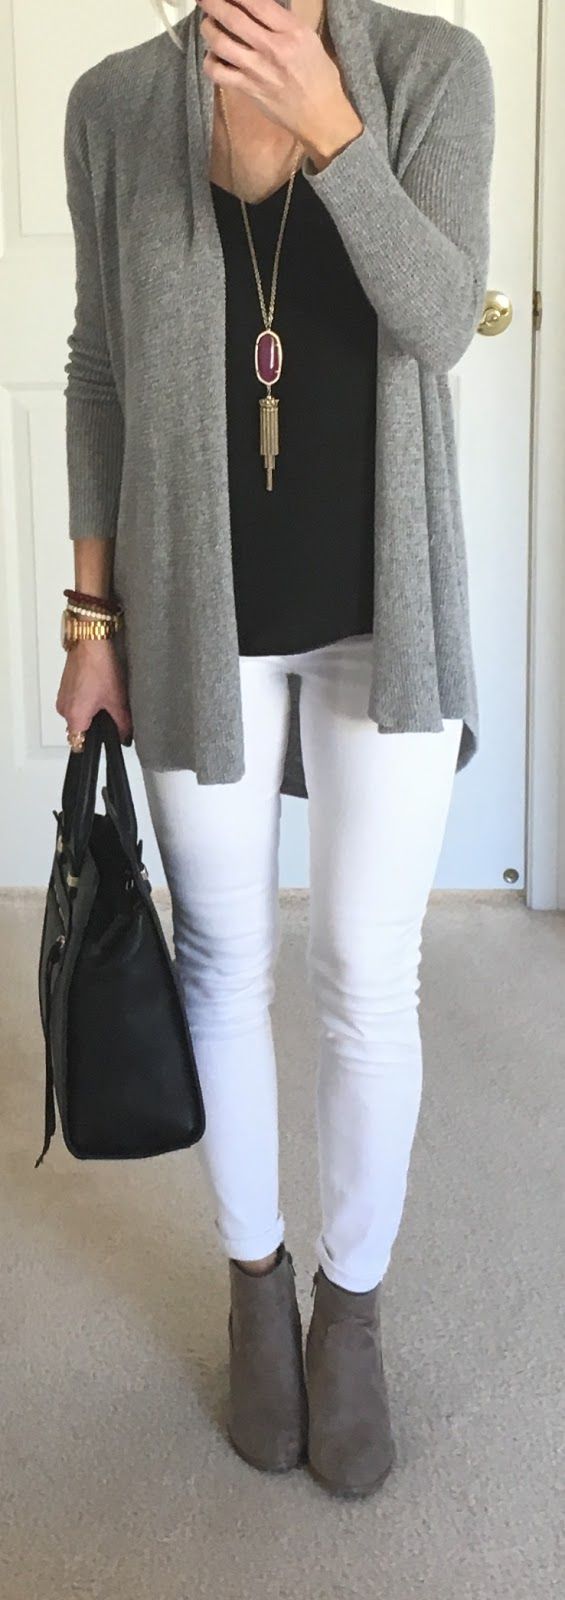 stylish look : grey cardi + black top + bag + white skinnies + boots